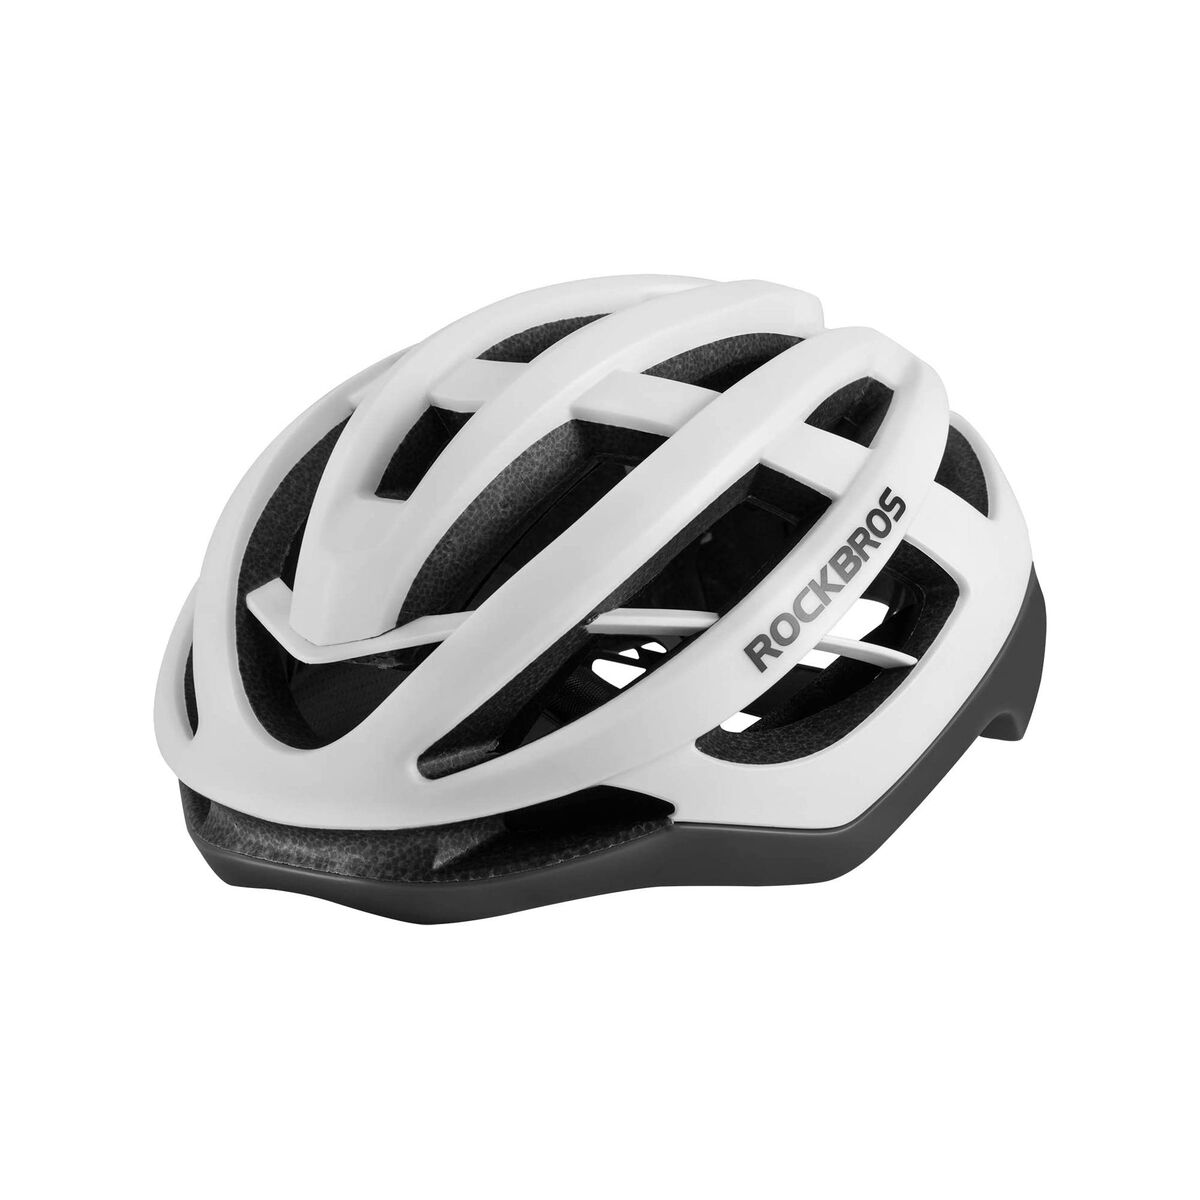 ROCKBROS Cycling Helmet Medium HC58WG White